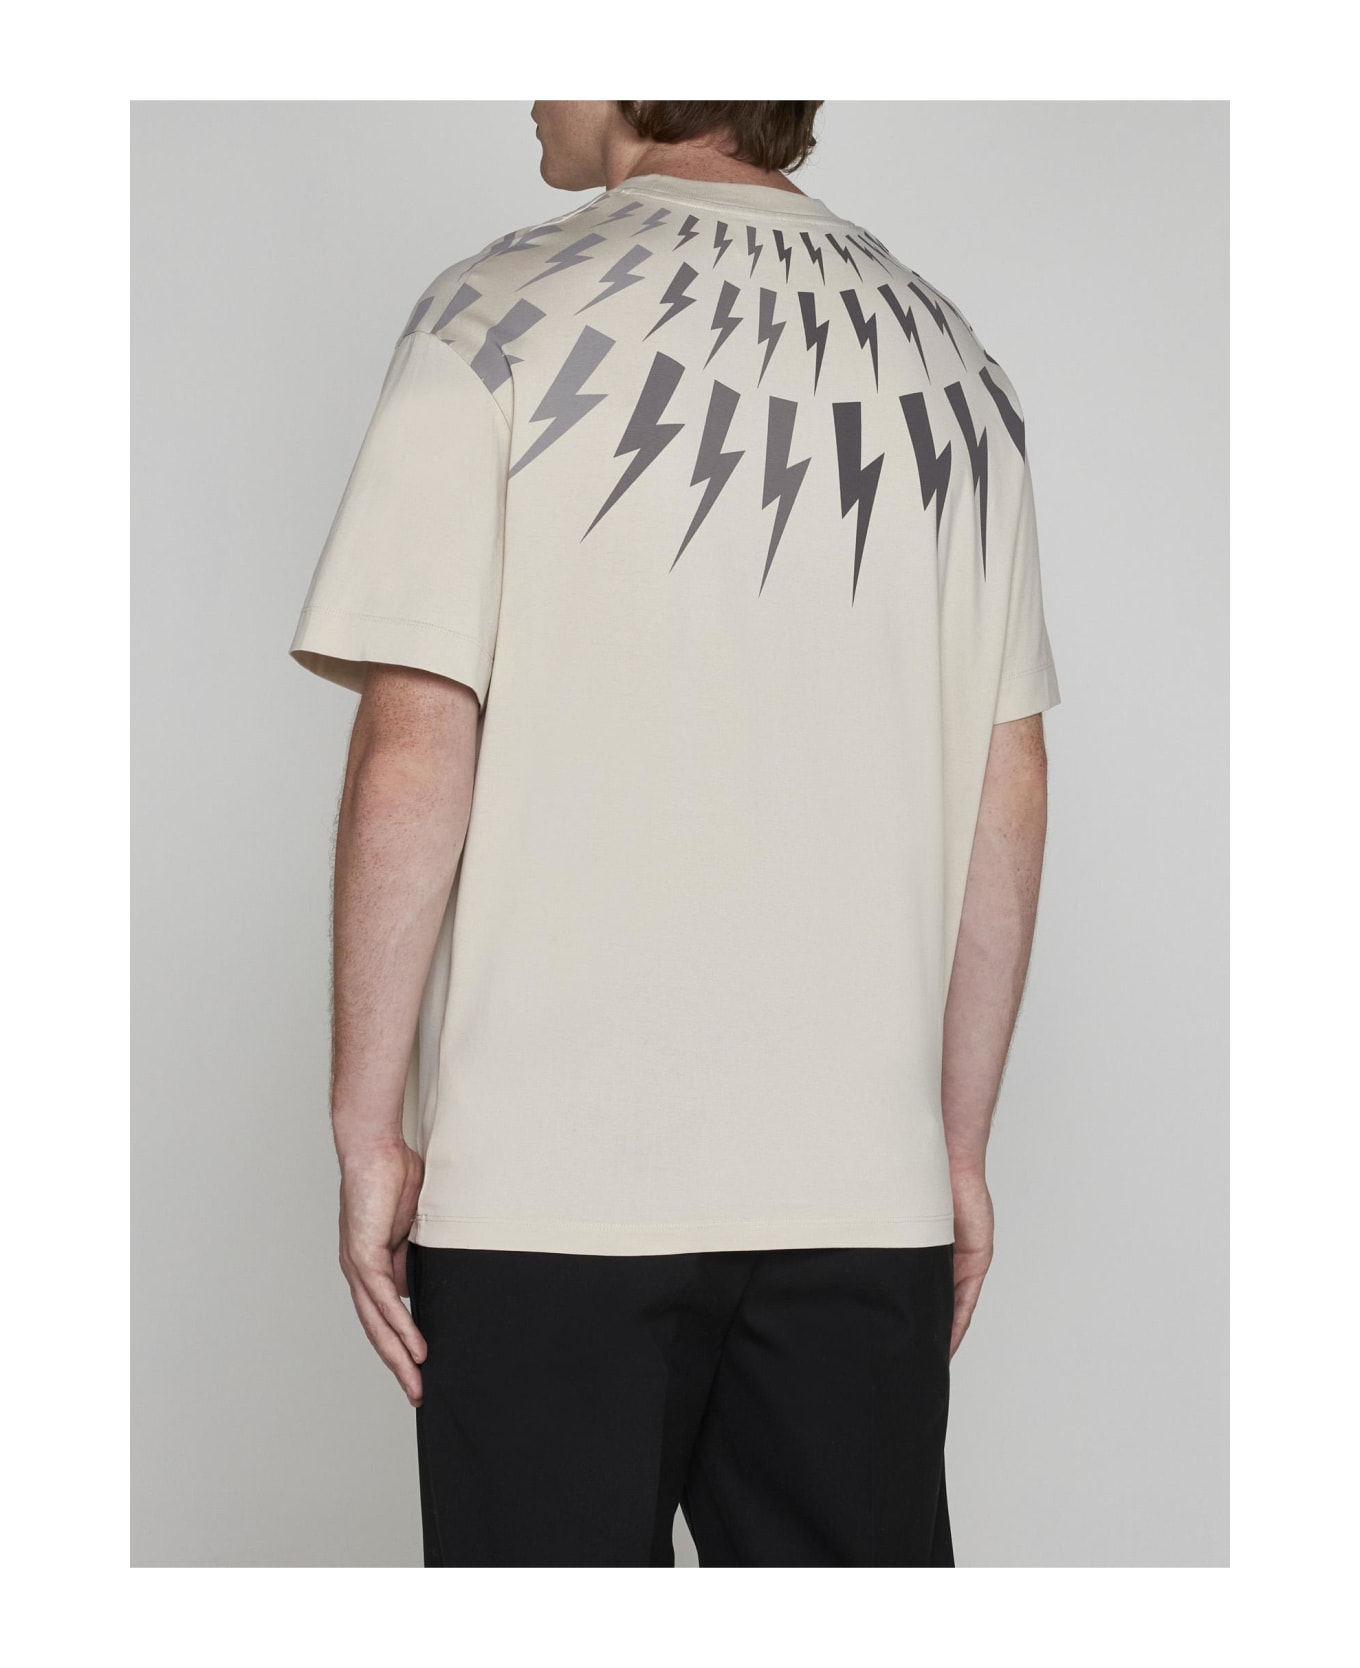 Neil Barrett Fairisle Thunderbolt Cotton T-shirt - Dkivo Steel